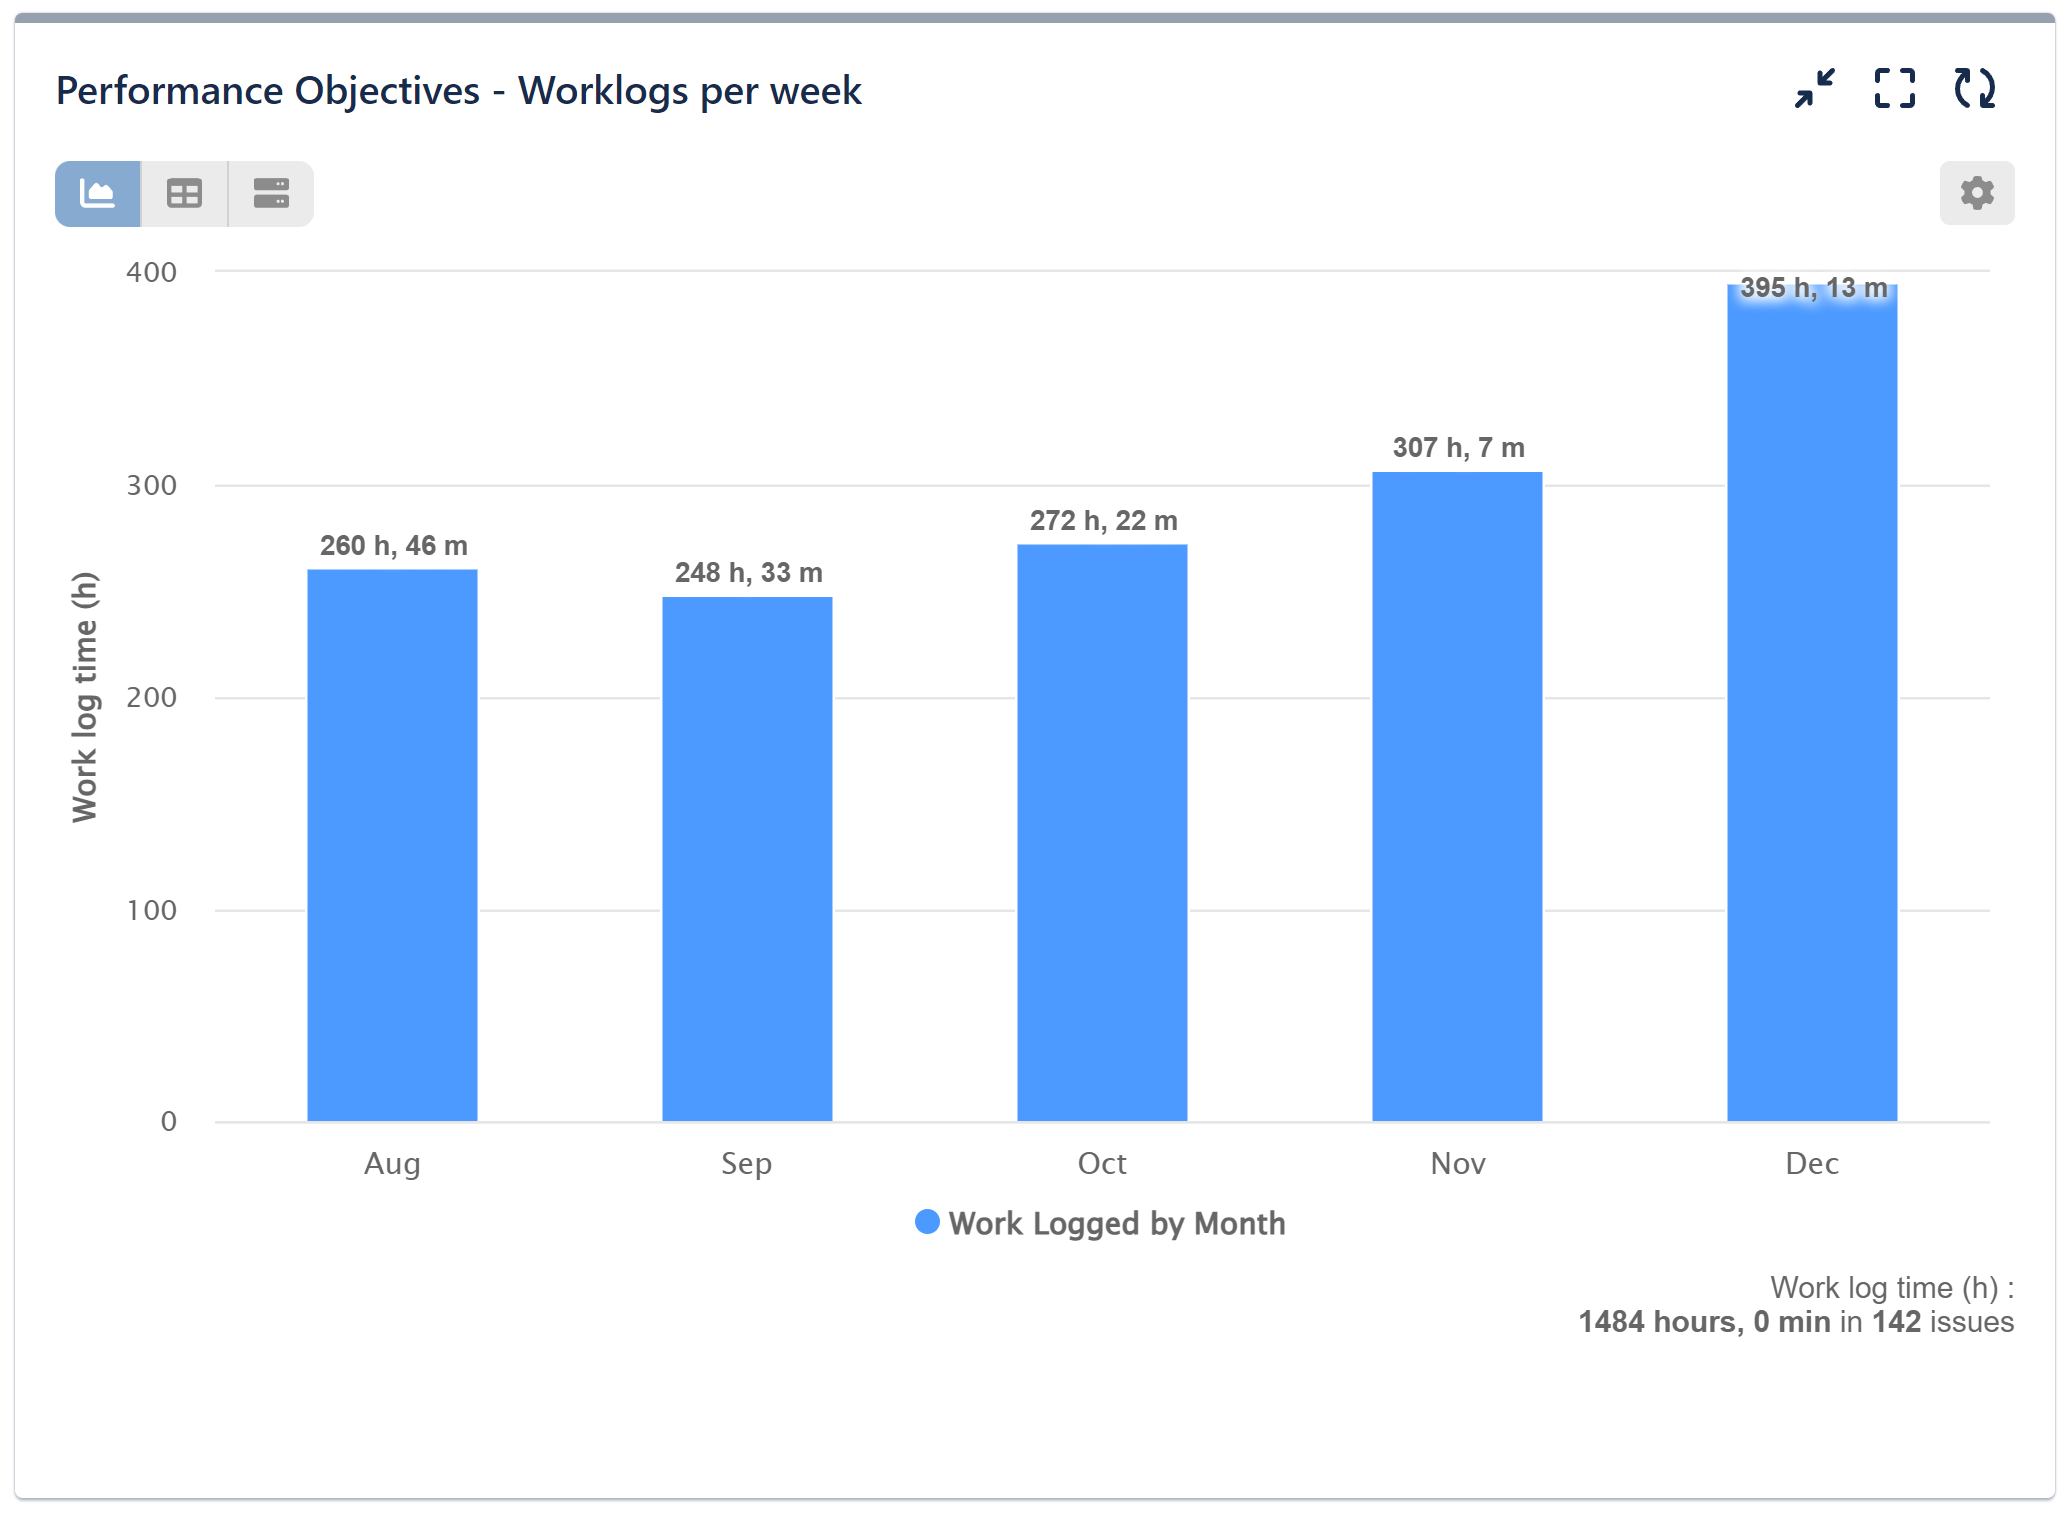 Work logs per week bar chart